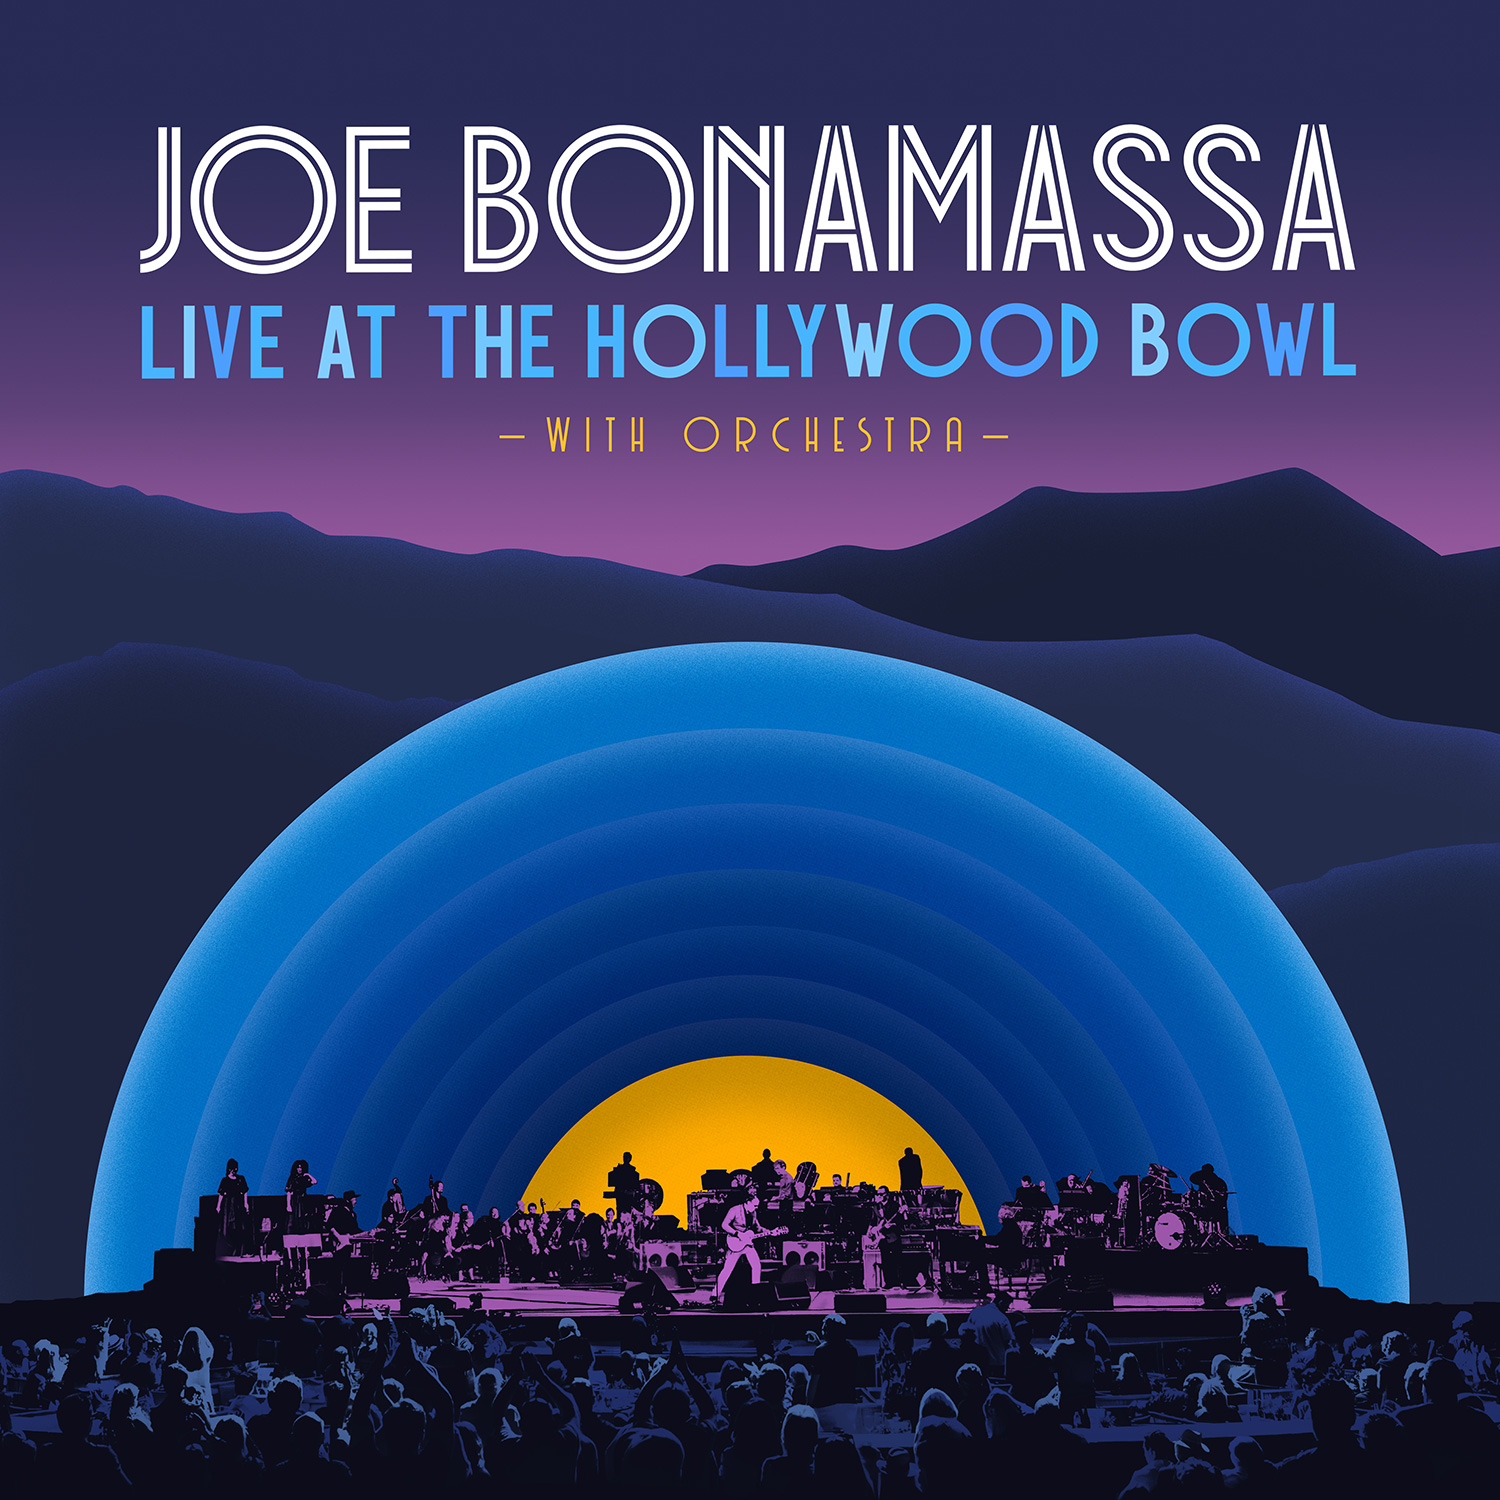 JOE BONAMASSA – Live at the Hollywood Bowl with Orchestra